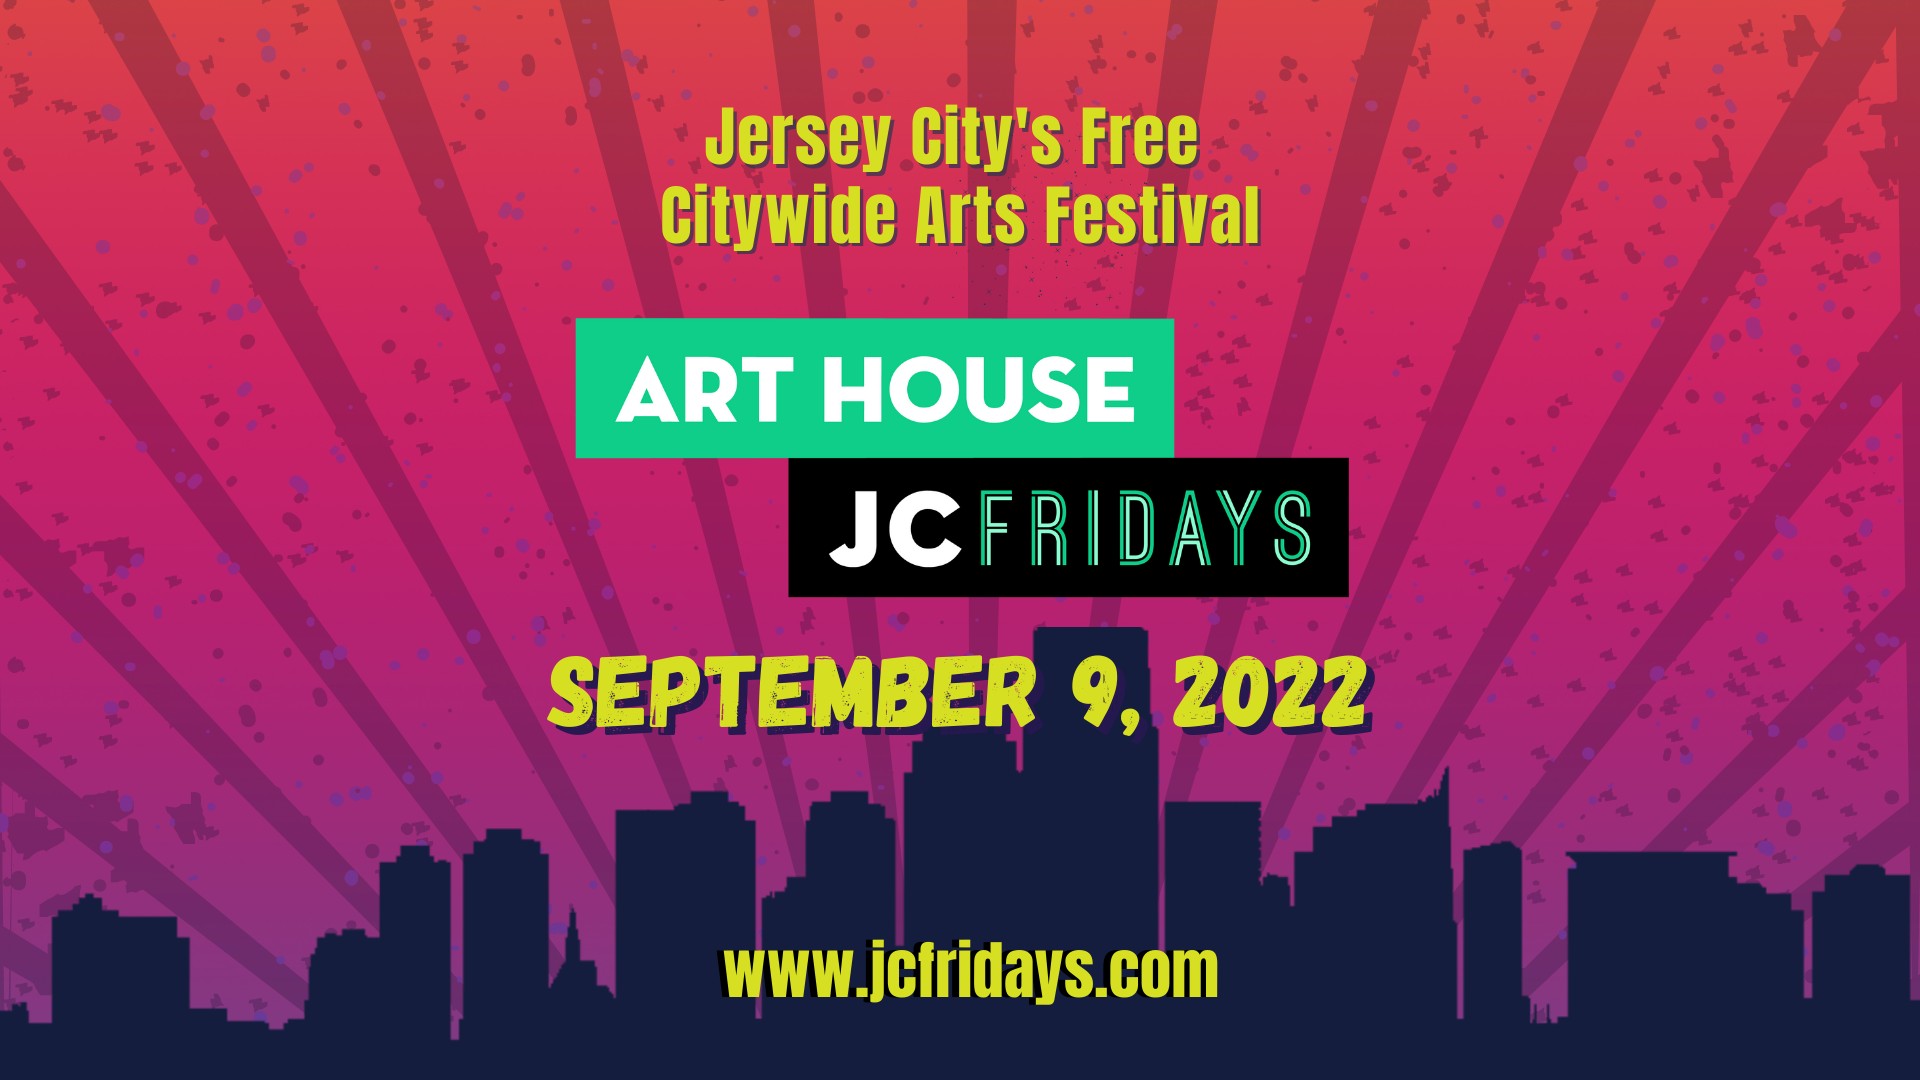 Jersey City's Free Citywide Arts Festival, Art House JC Fridays, September 9, 2022, www.jcfridays.com